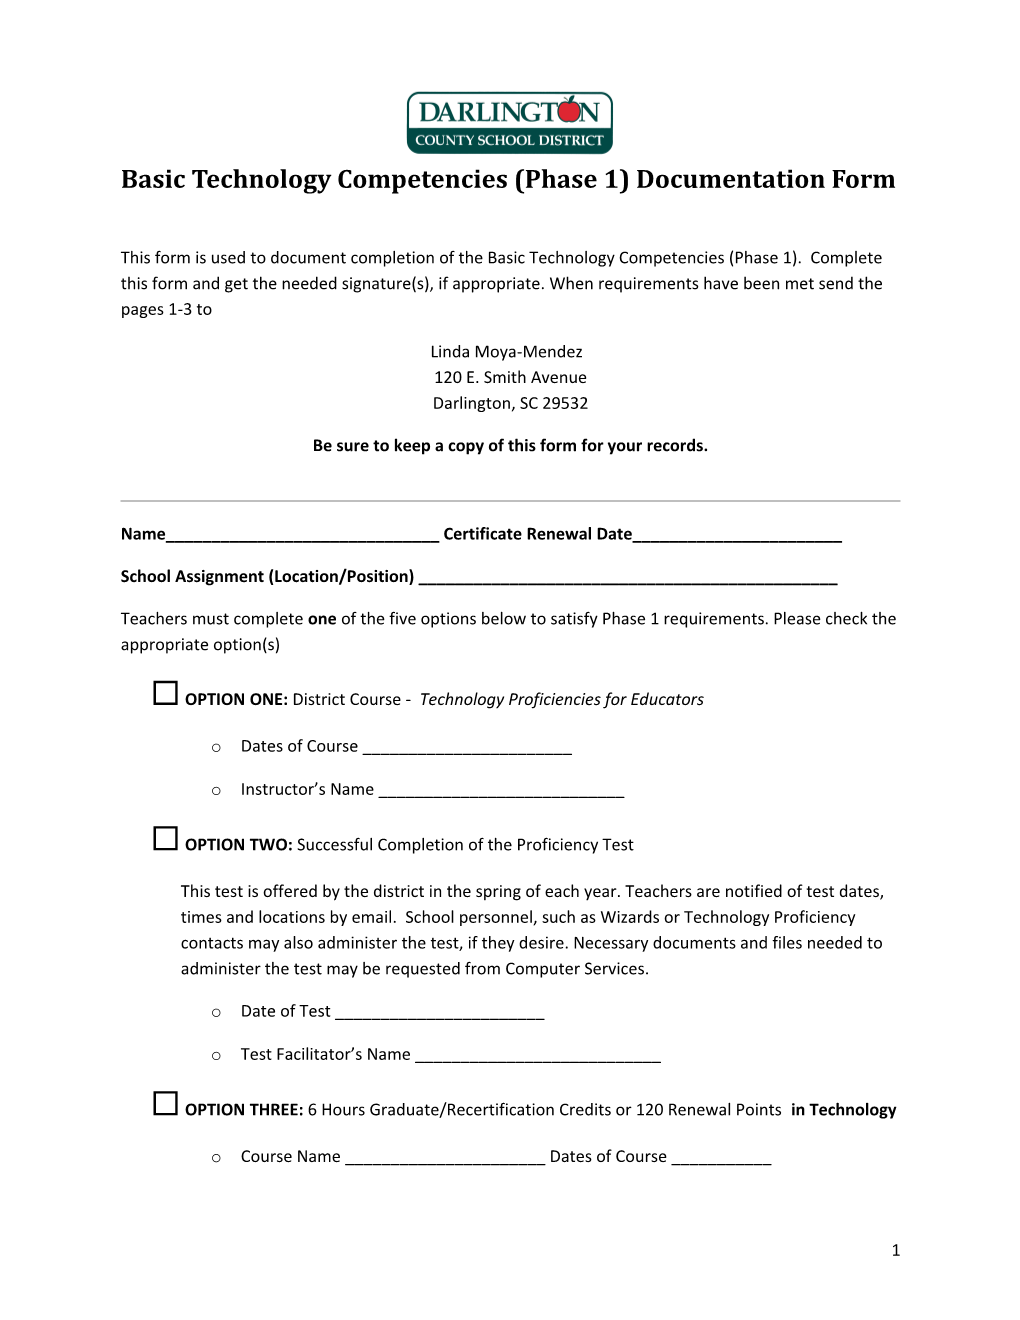 Basic Technology Competencies (Phase 1) Documentation Form